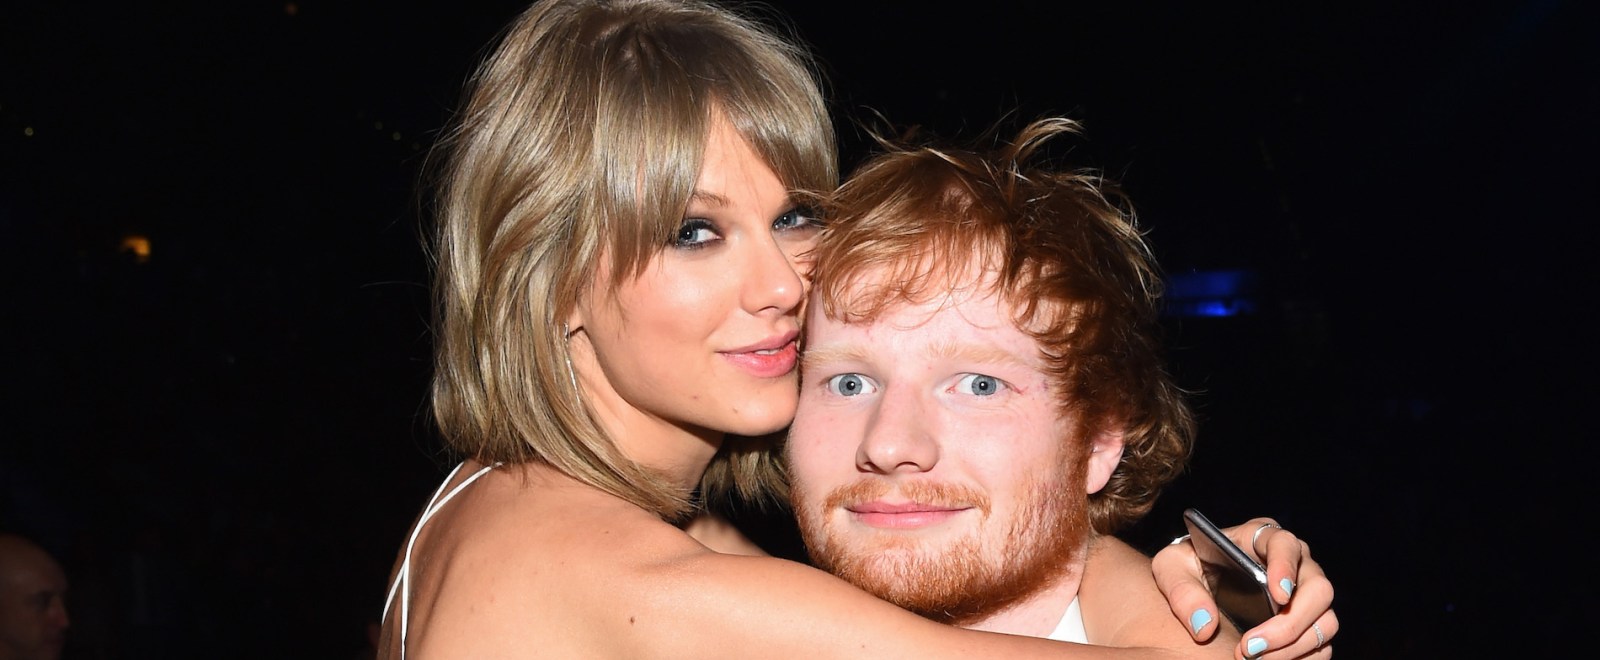 Taylor Swift Ed Sheeran 2015 Billboard Music Awards